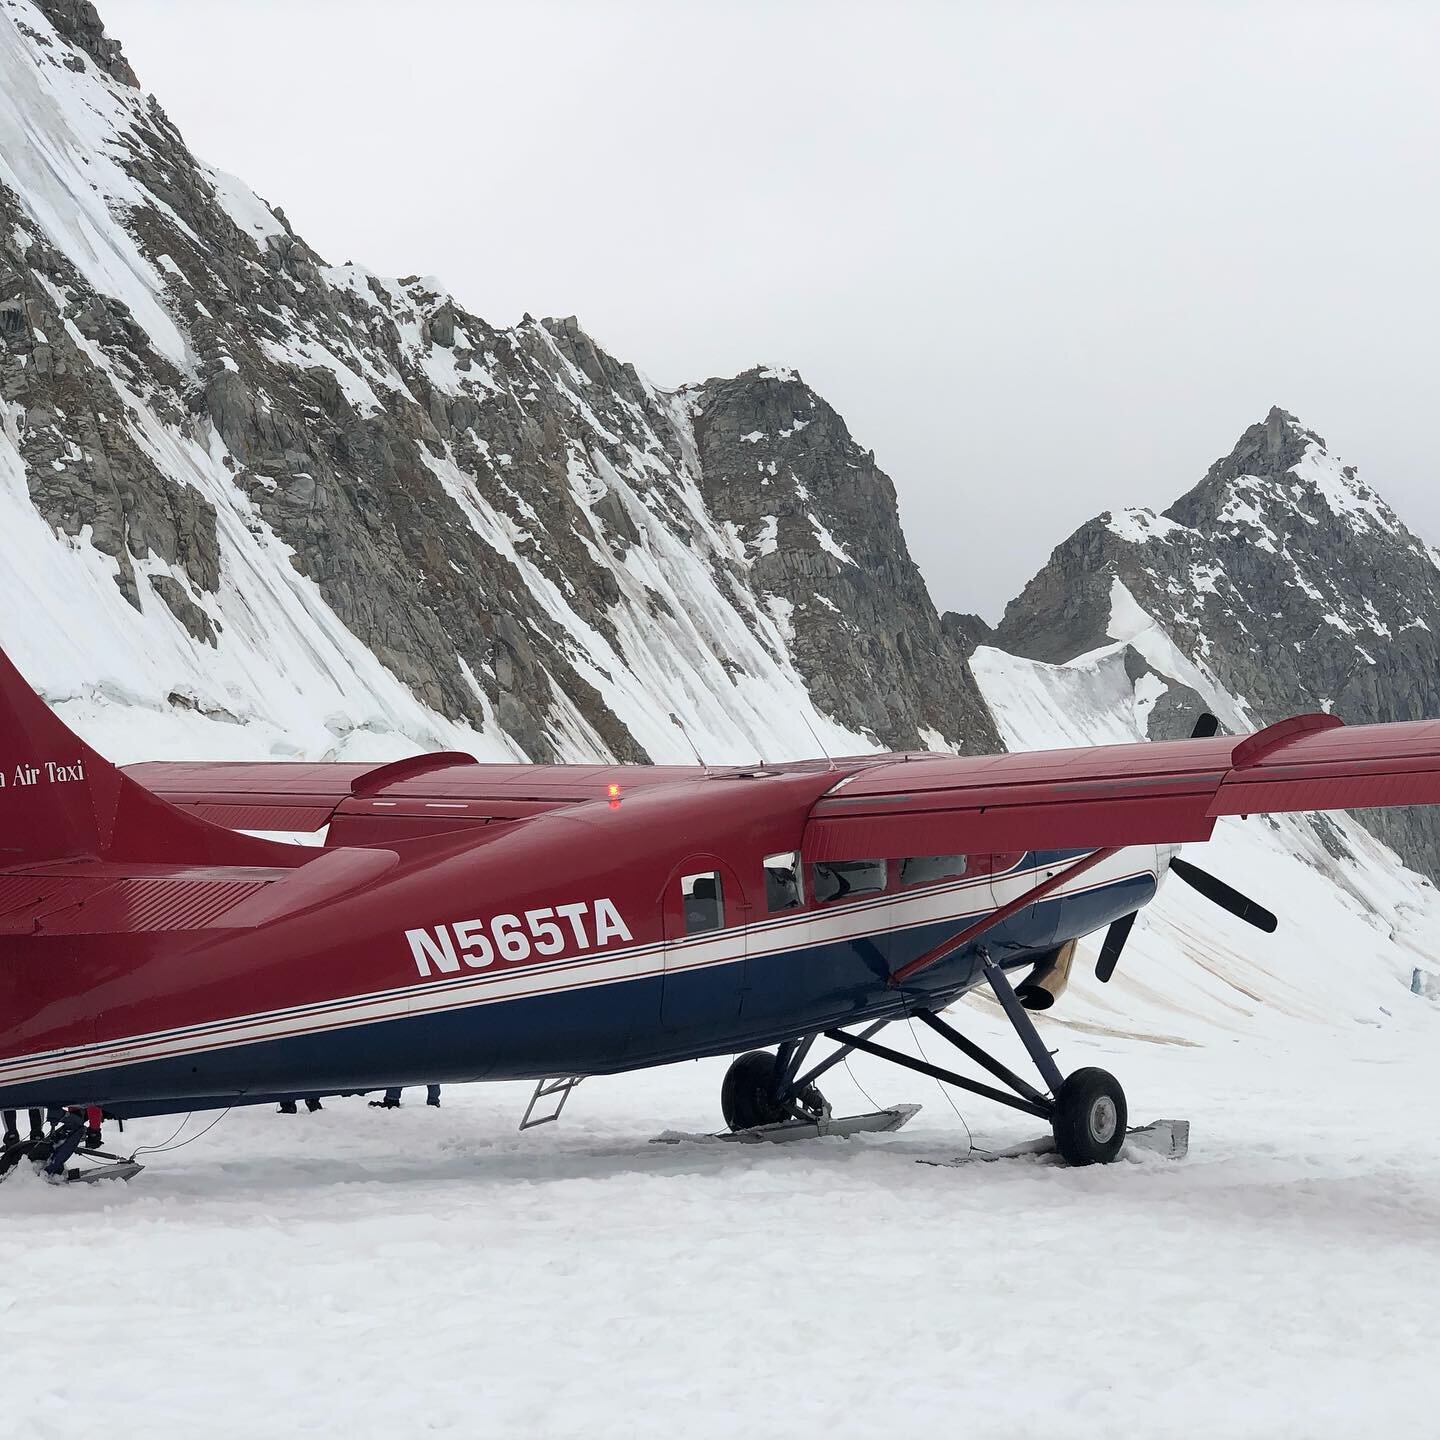 I landed on a #glacier today #privateplane #alaskaadventure  #mountains